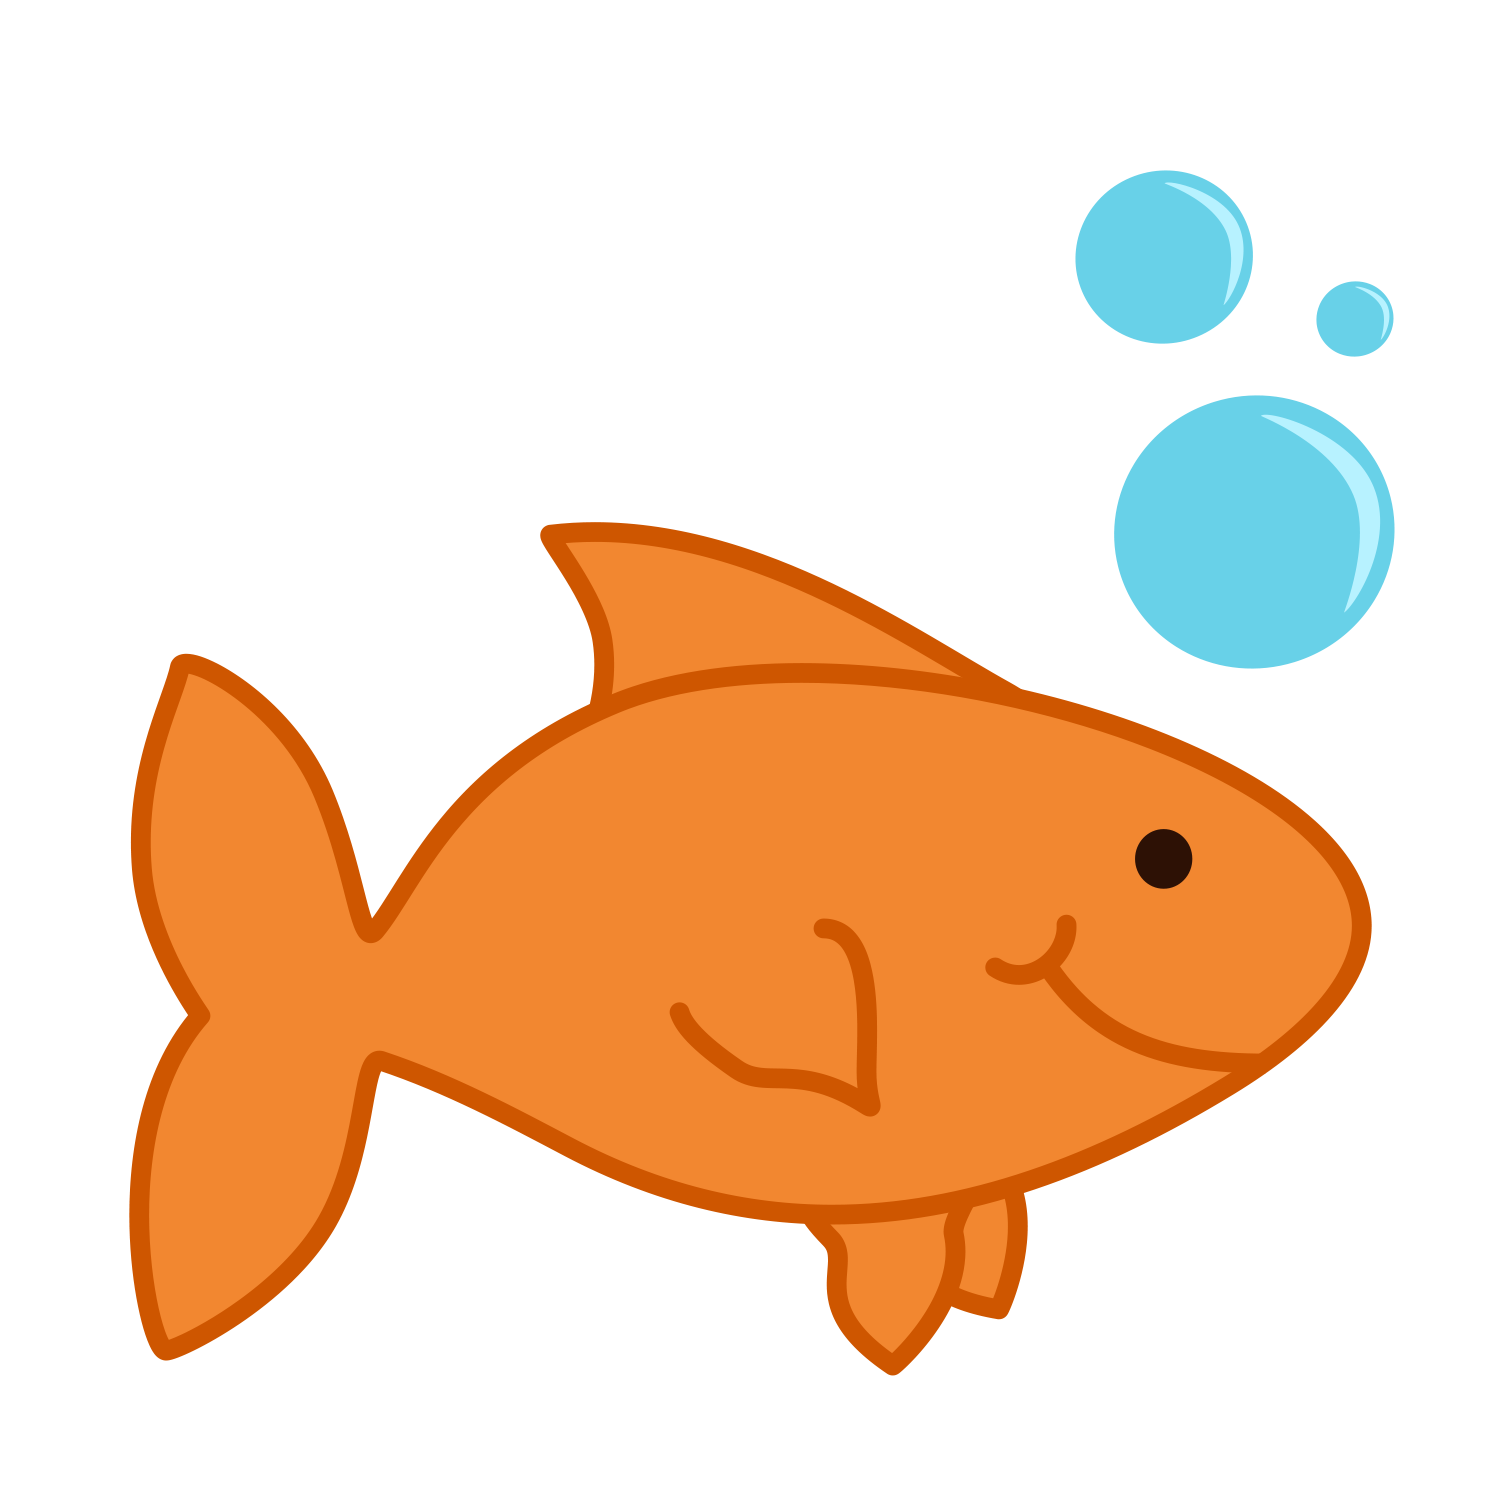 Goldfish Blank Card Printable And Free Matching Clip Art Image    Digi